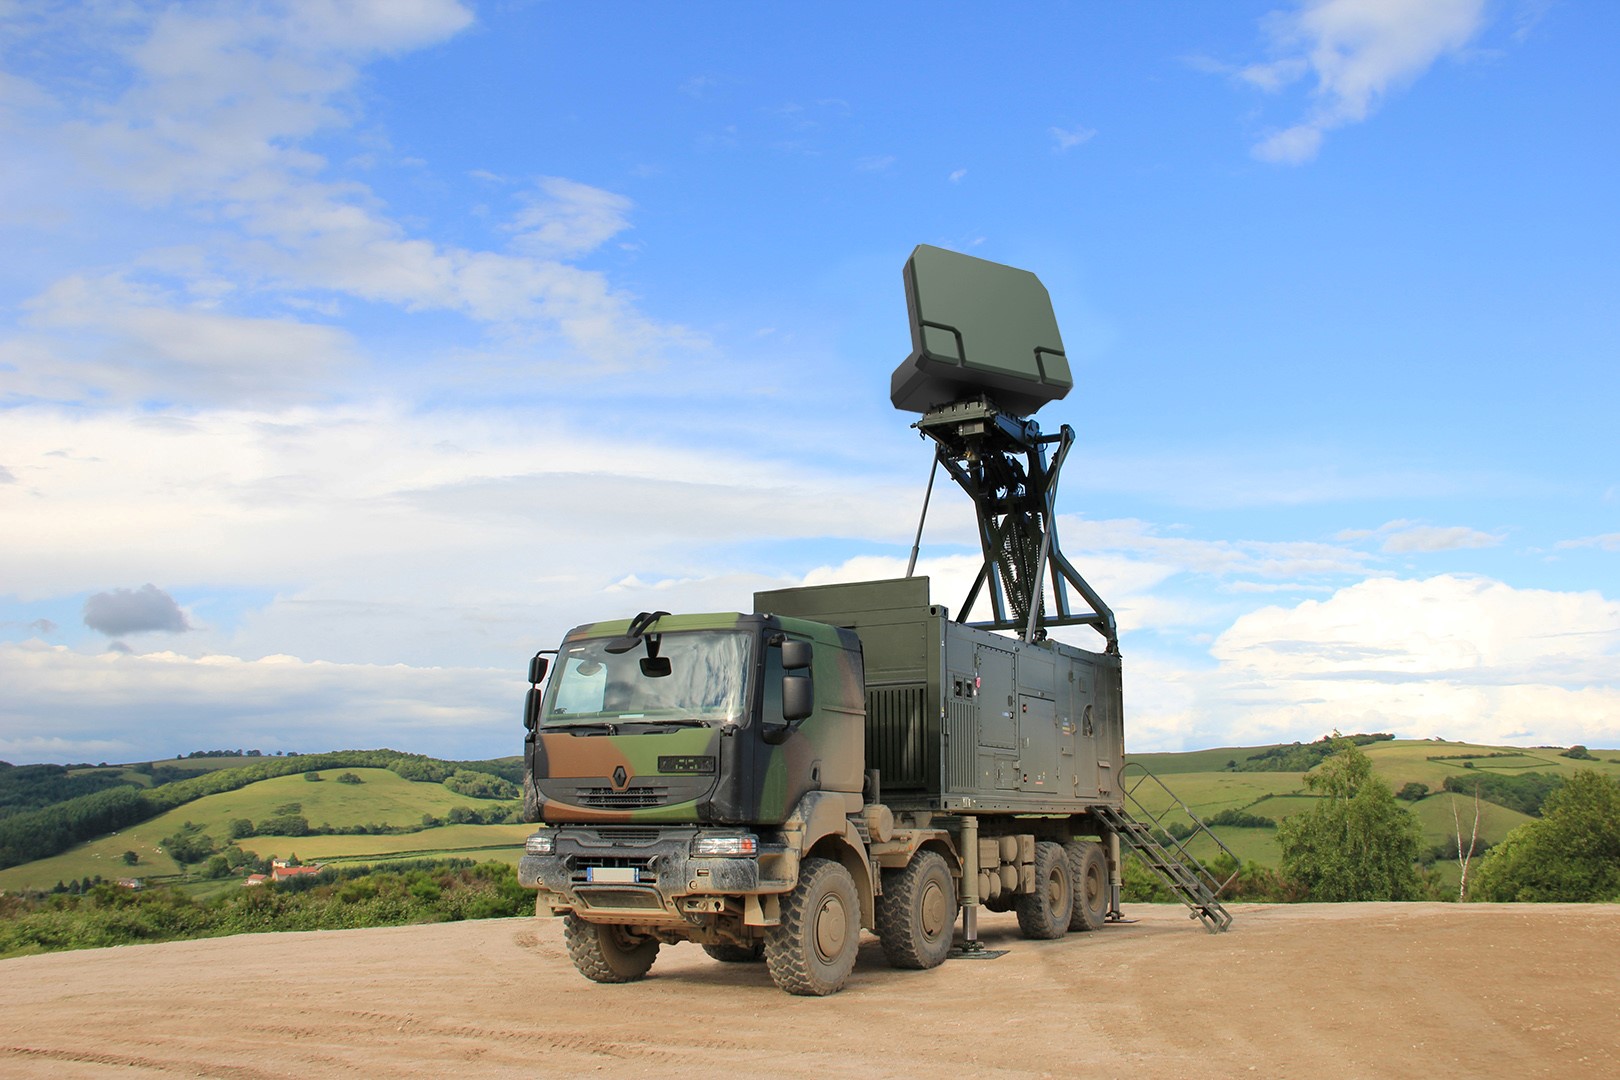 Ground Master 200 multi-mission radar